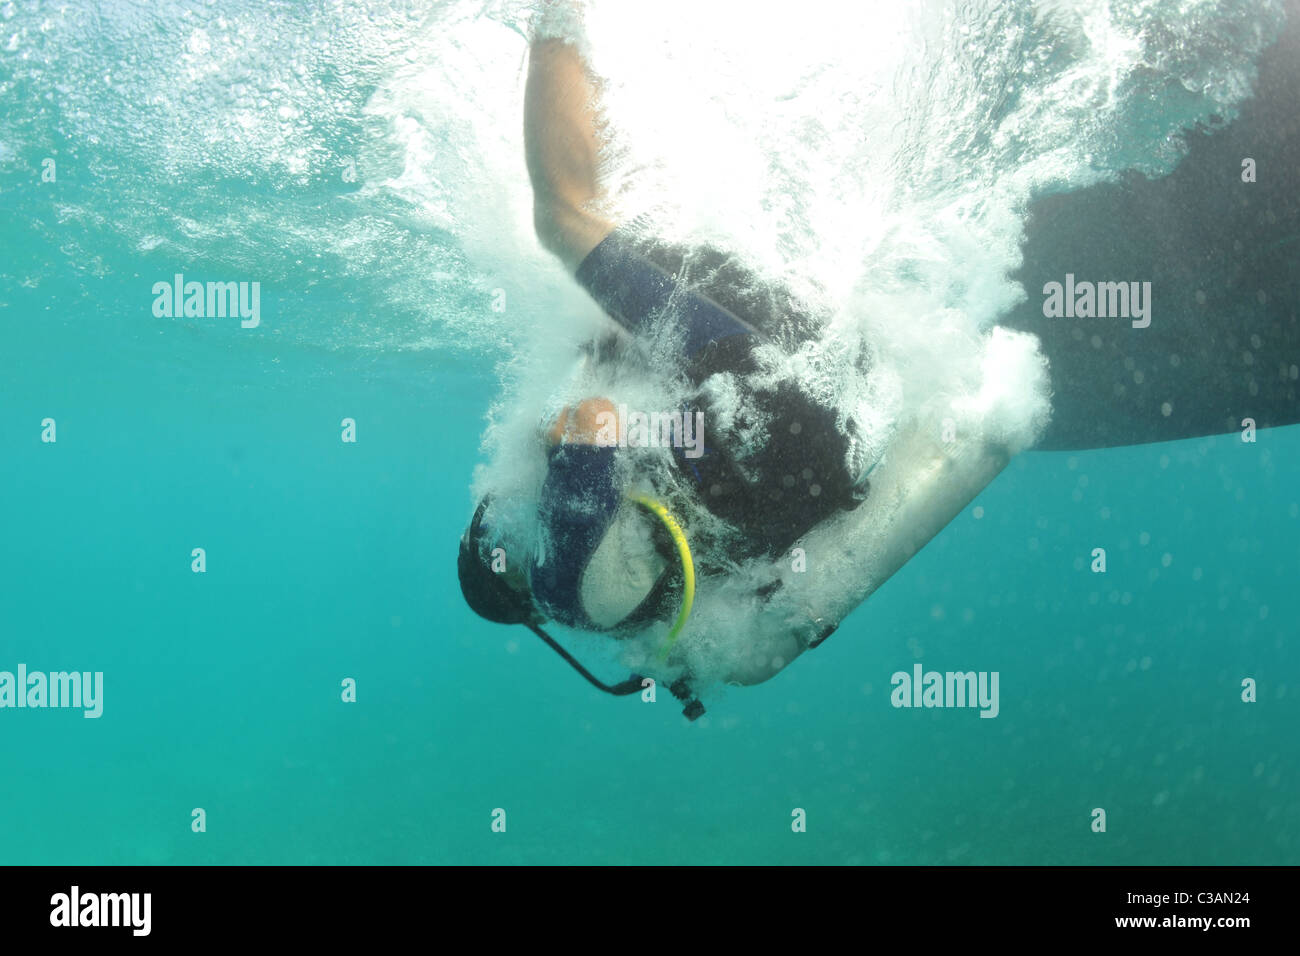 Backwards roll scuba diving Stock Photo - Alamy